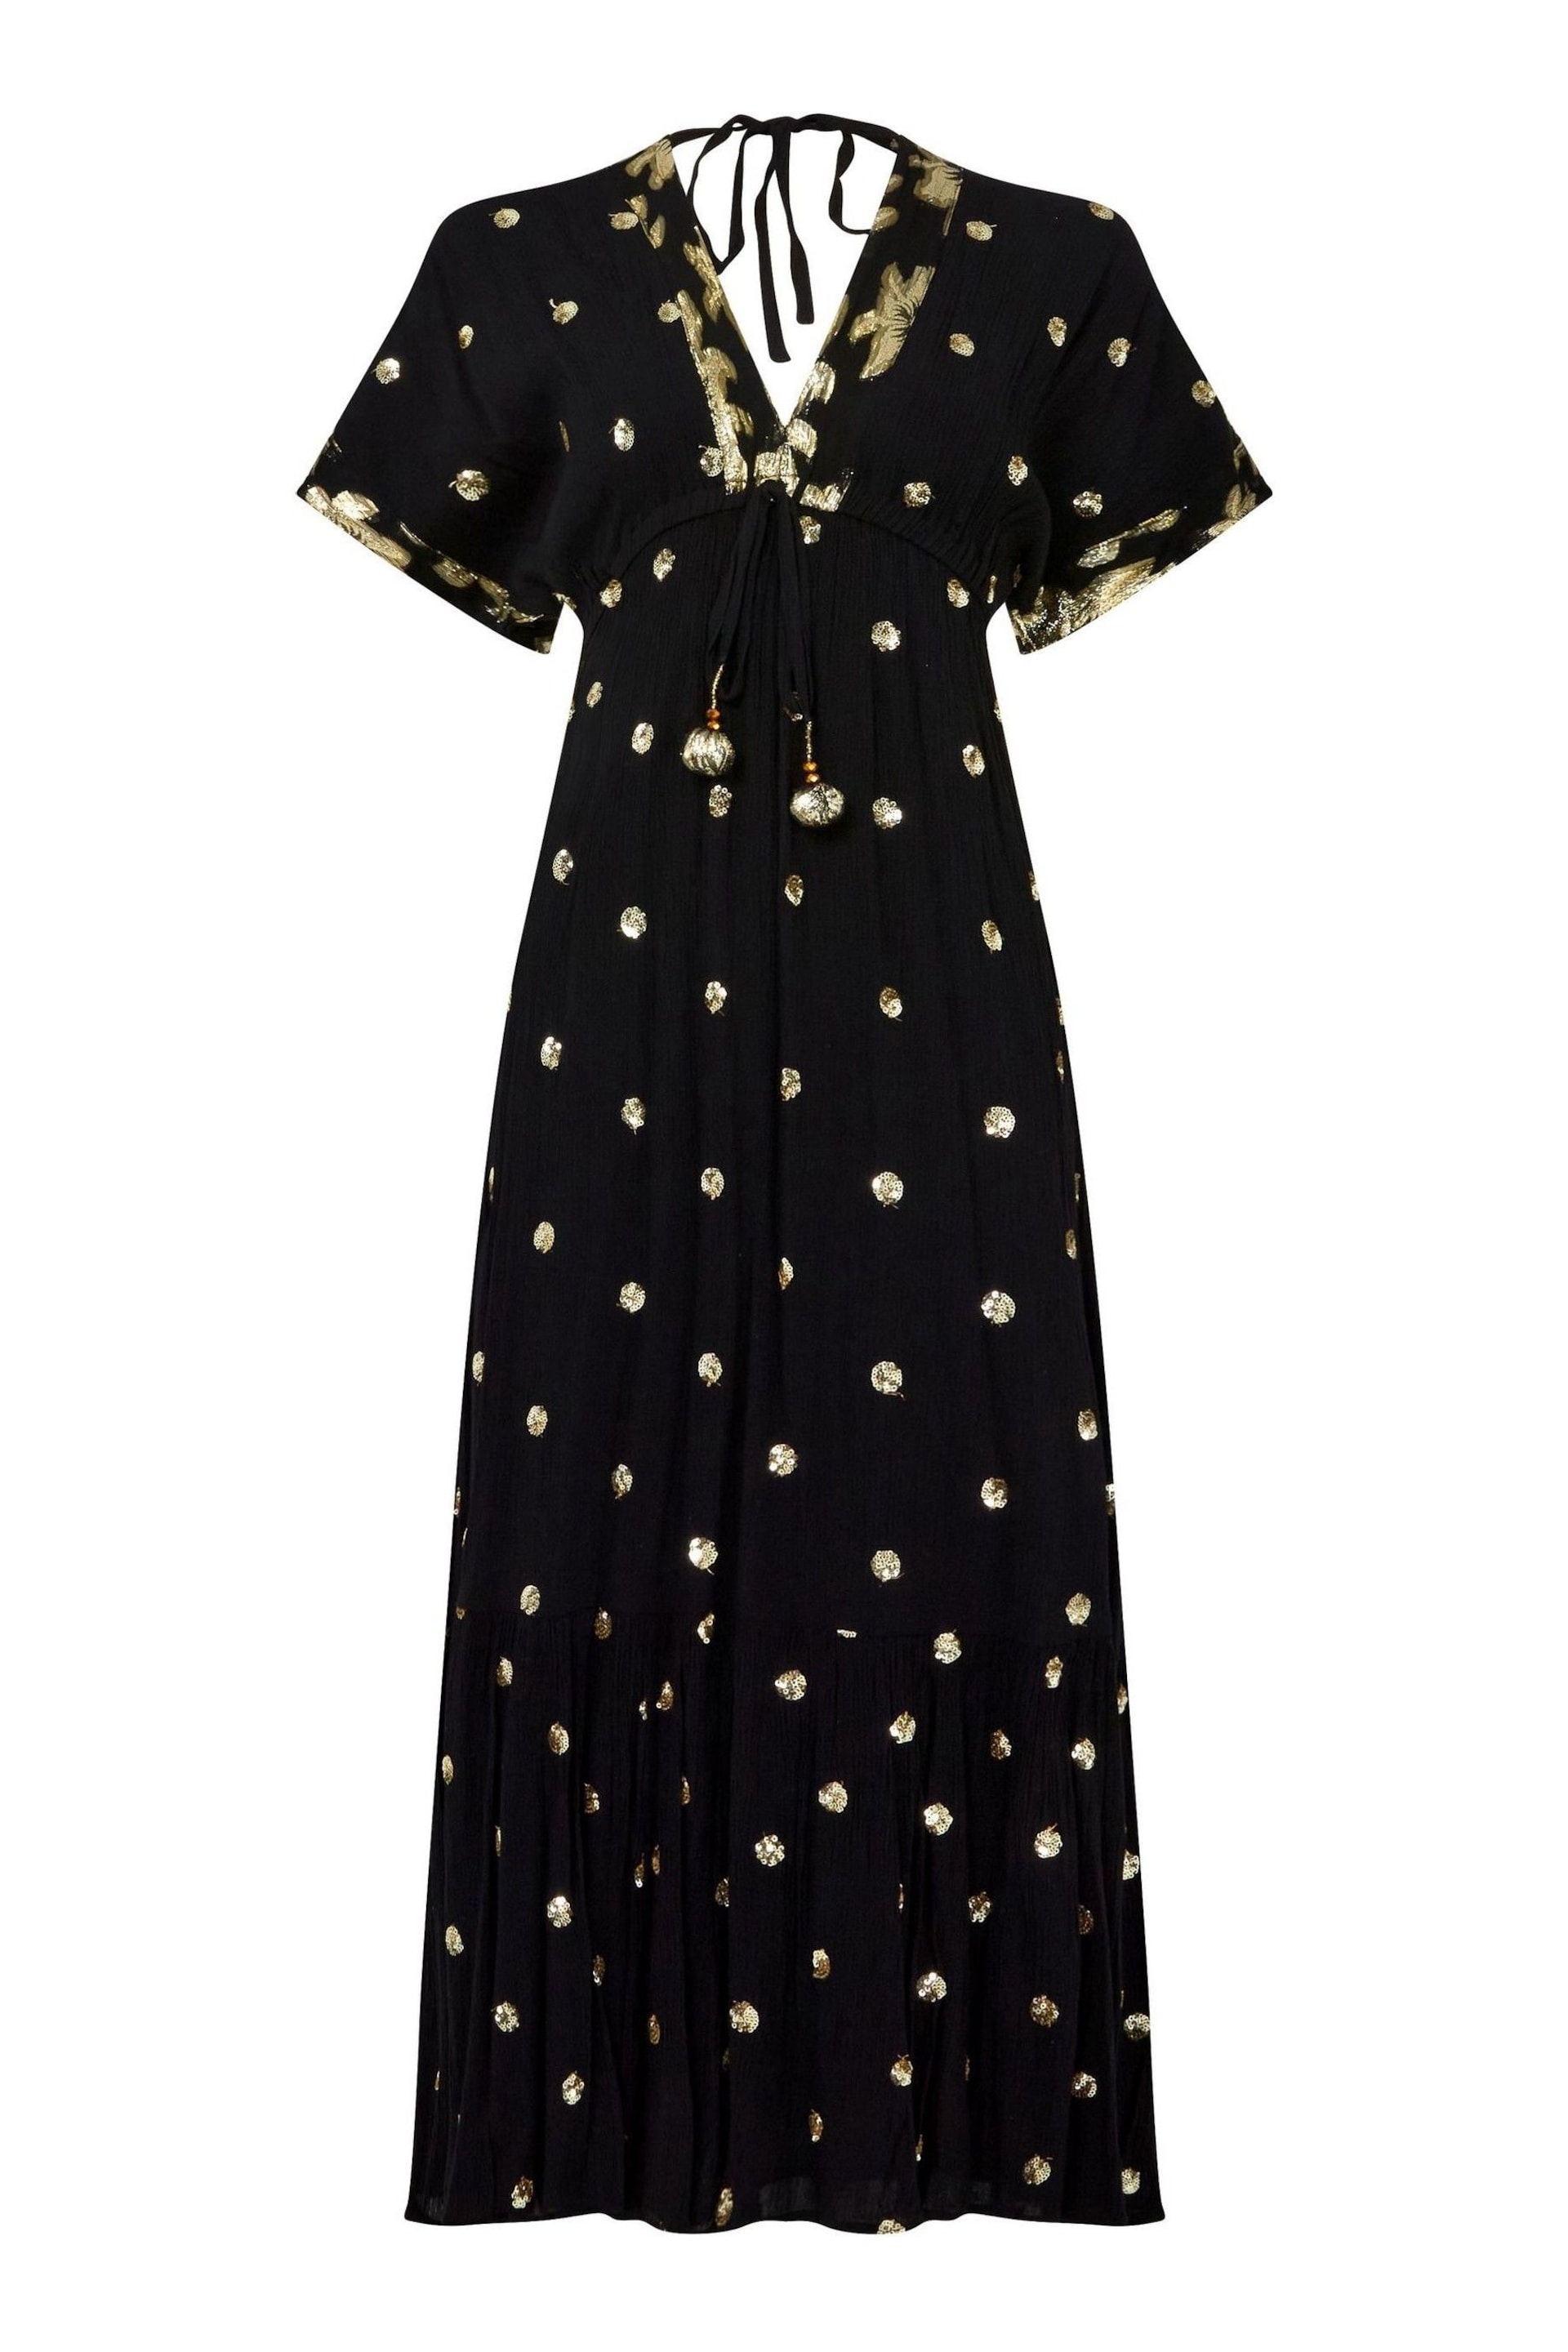 Joe Browns Dark Black Sparkle Sequin Dot Tiered Kimono Style Maxi Dress - Image 7 of 7